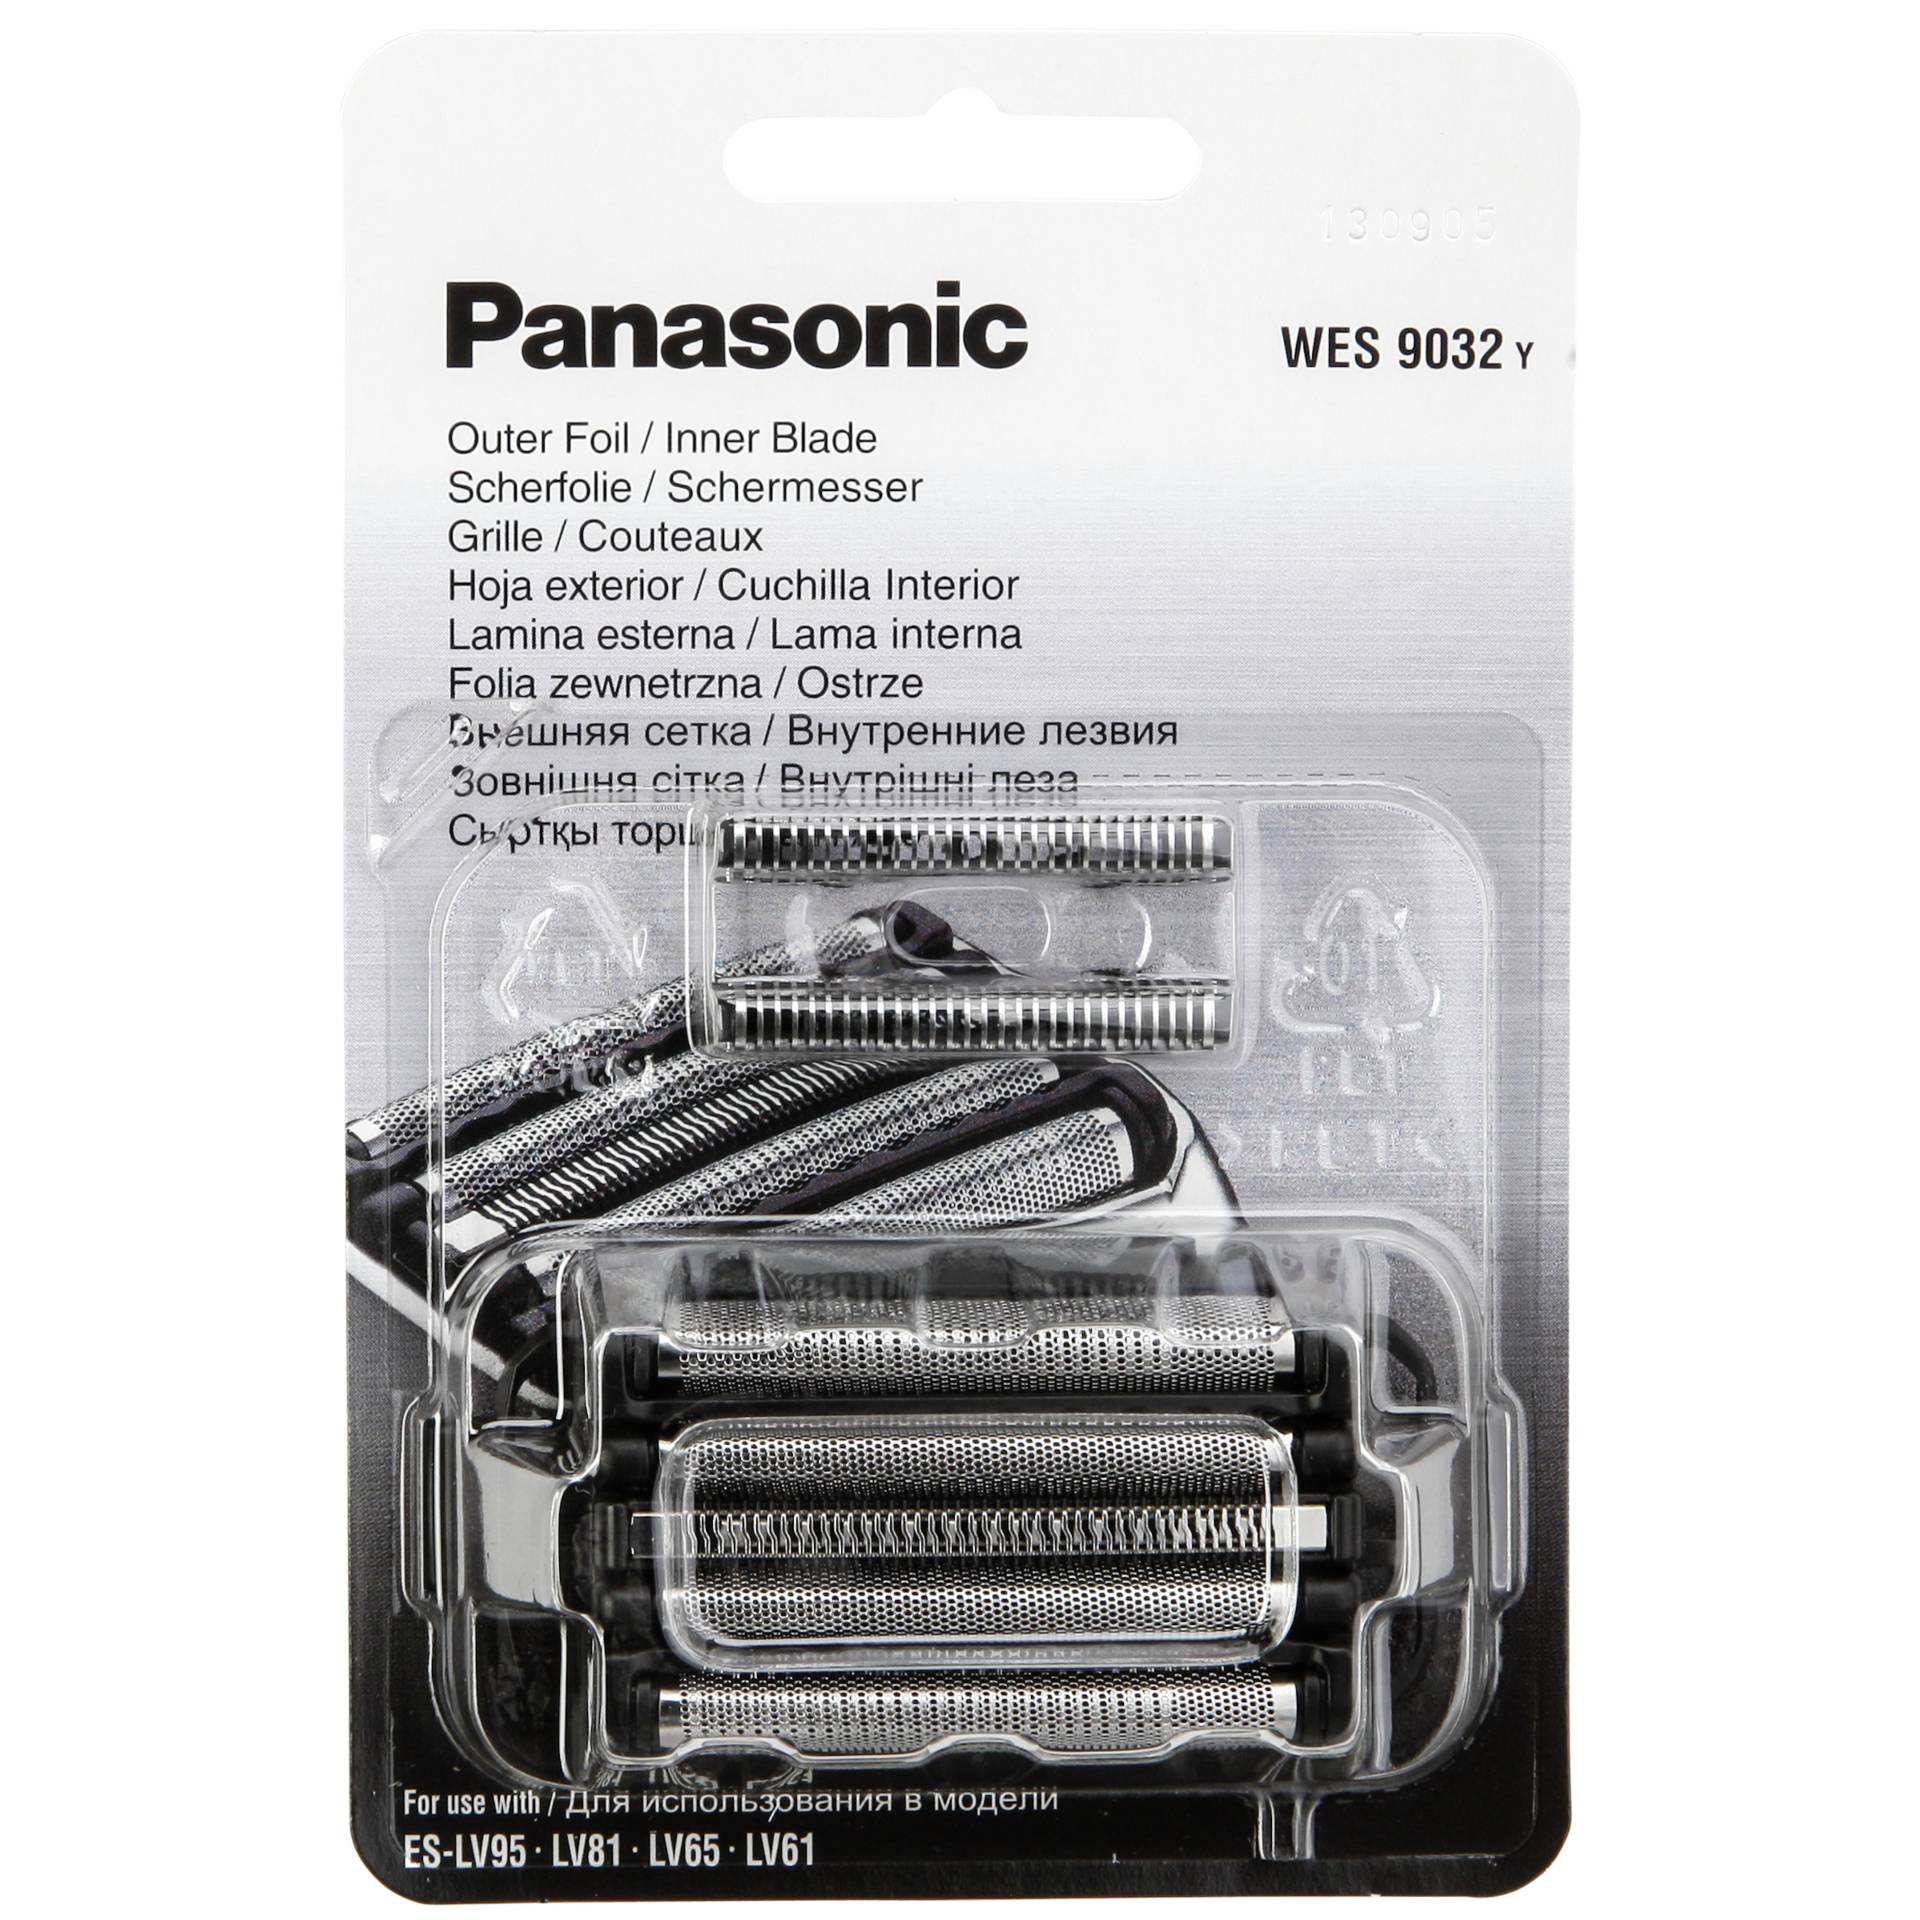 Panasonic WES 9032 Y1361 - Panasonic - Autoscatto Store